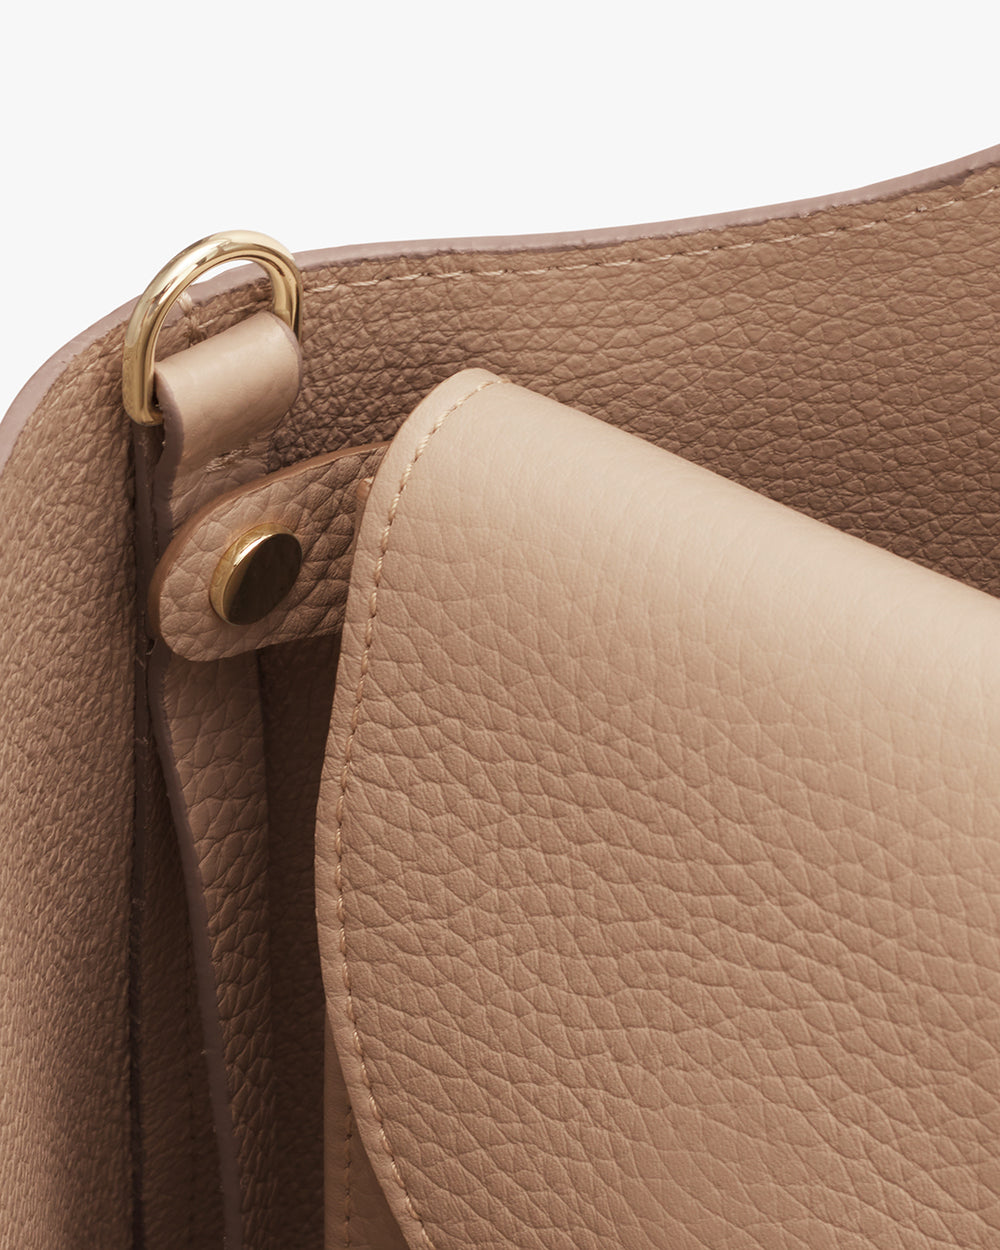 Close-up view of a handbag with visible handle and metal ring.